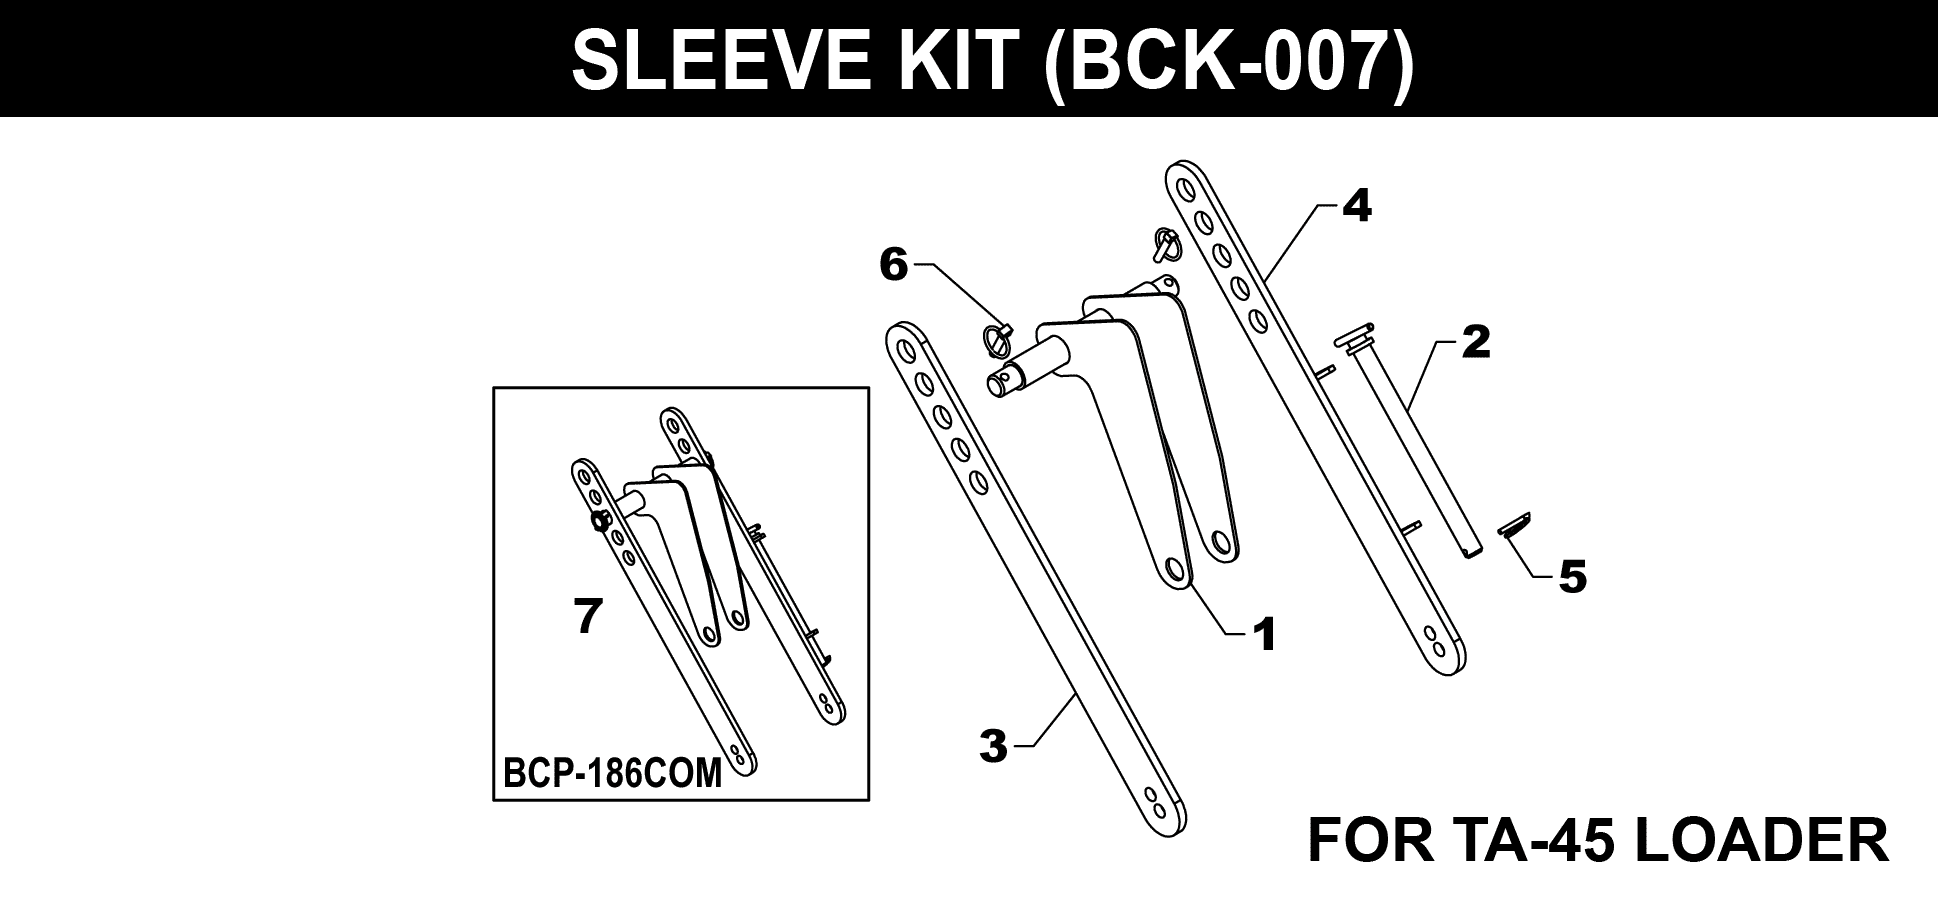 BCK-007 Sleeve Kit